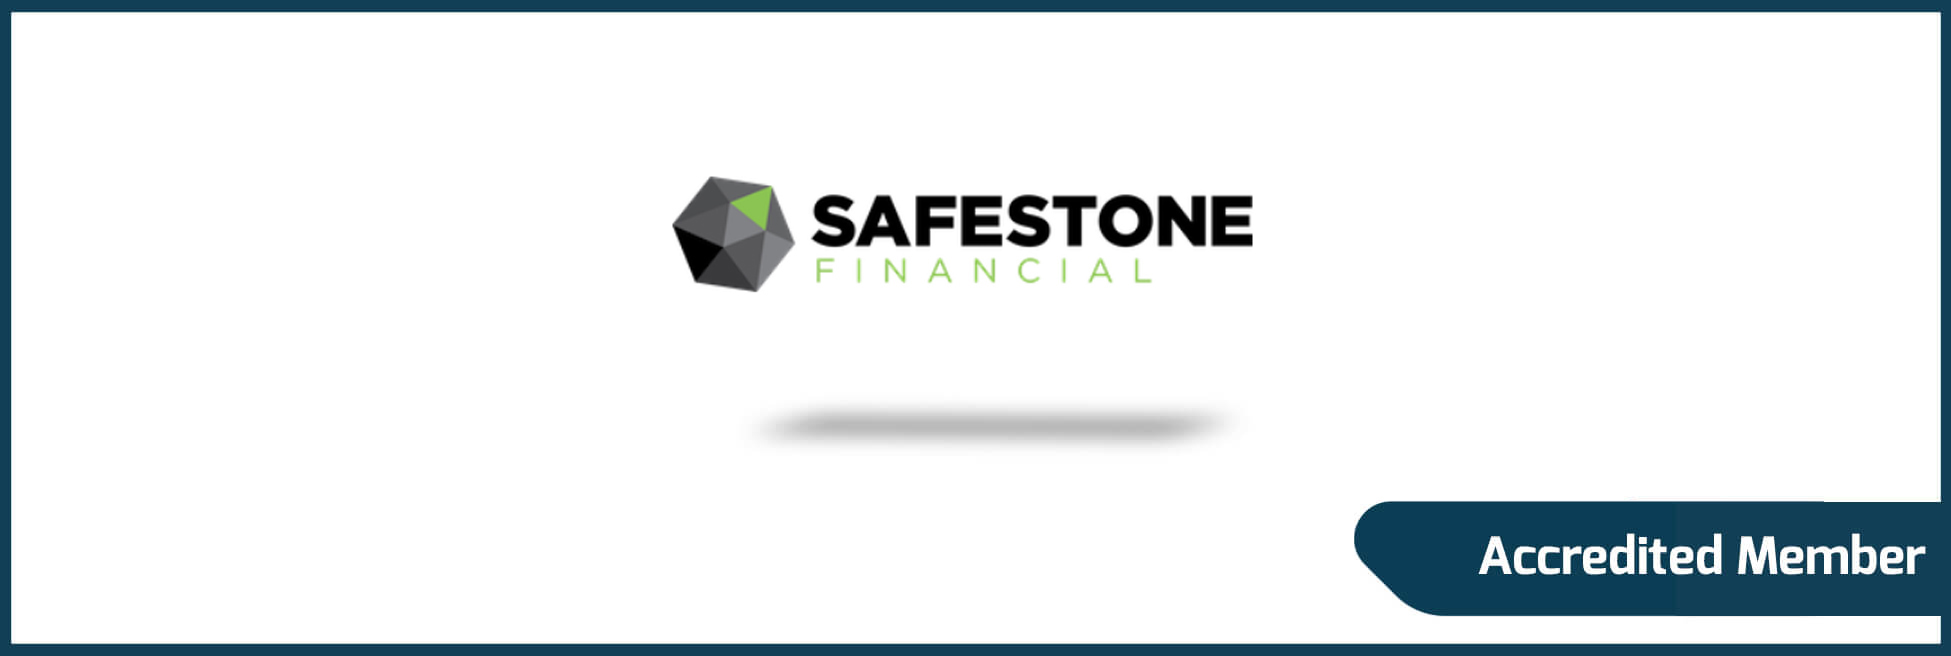 Safestone Financial